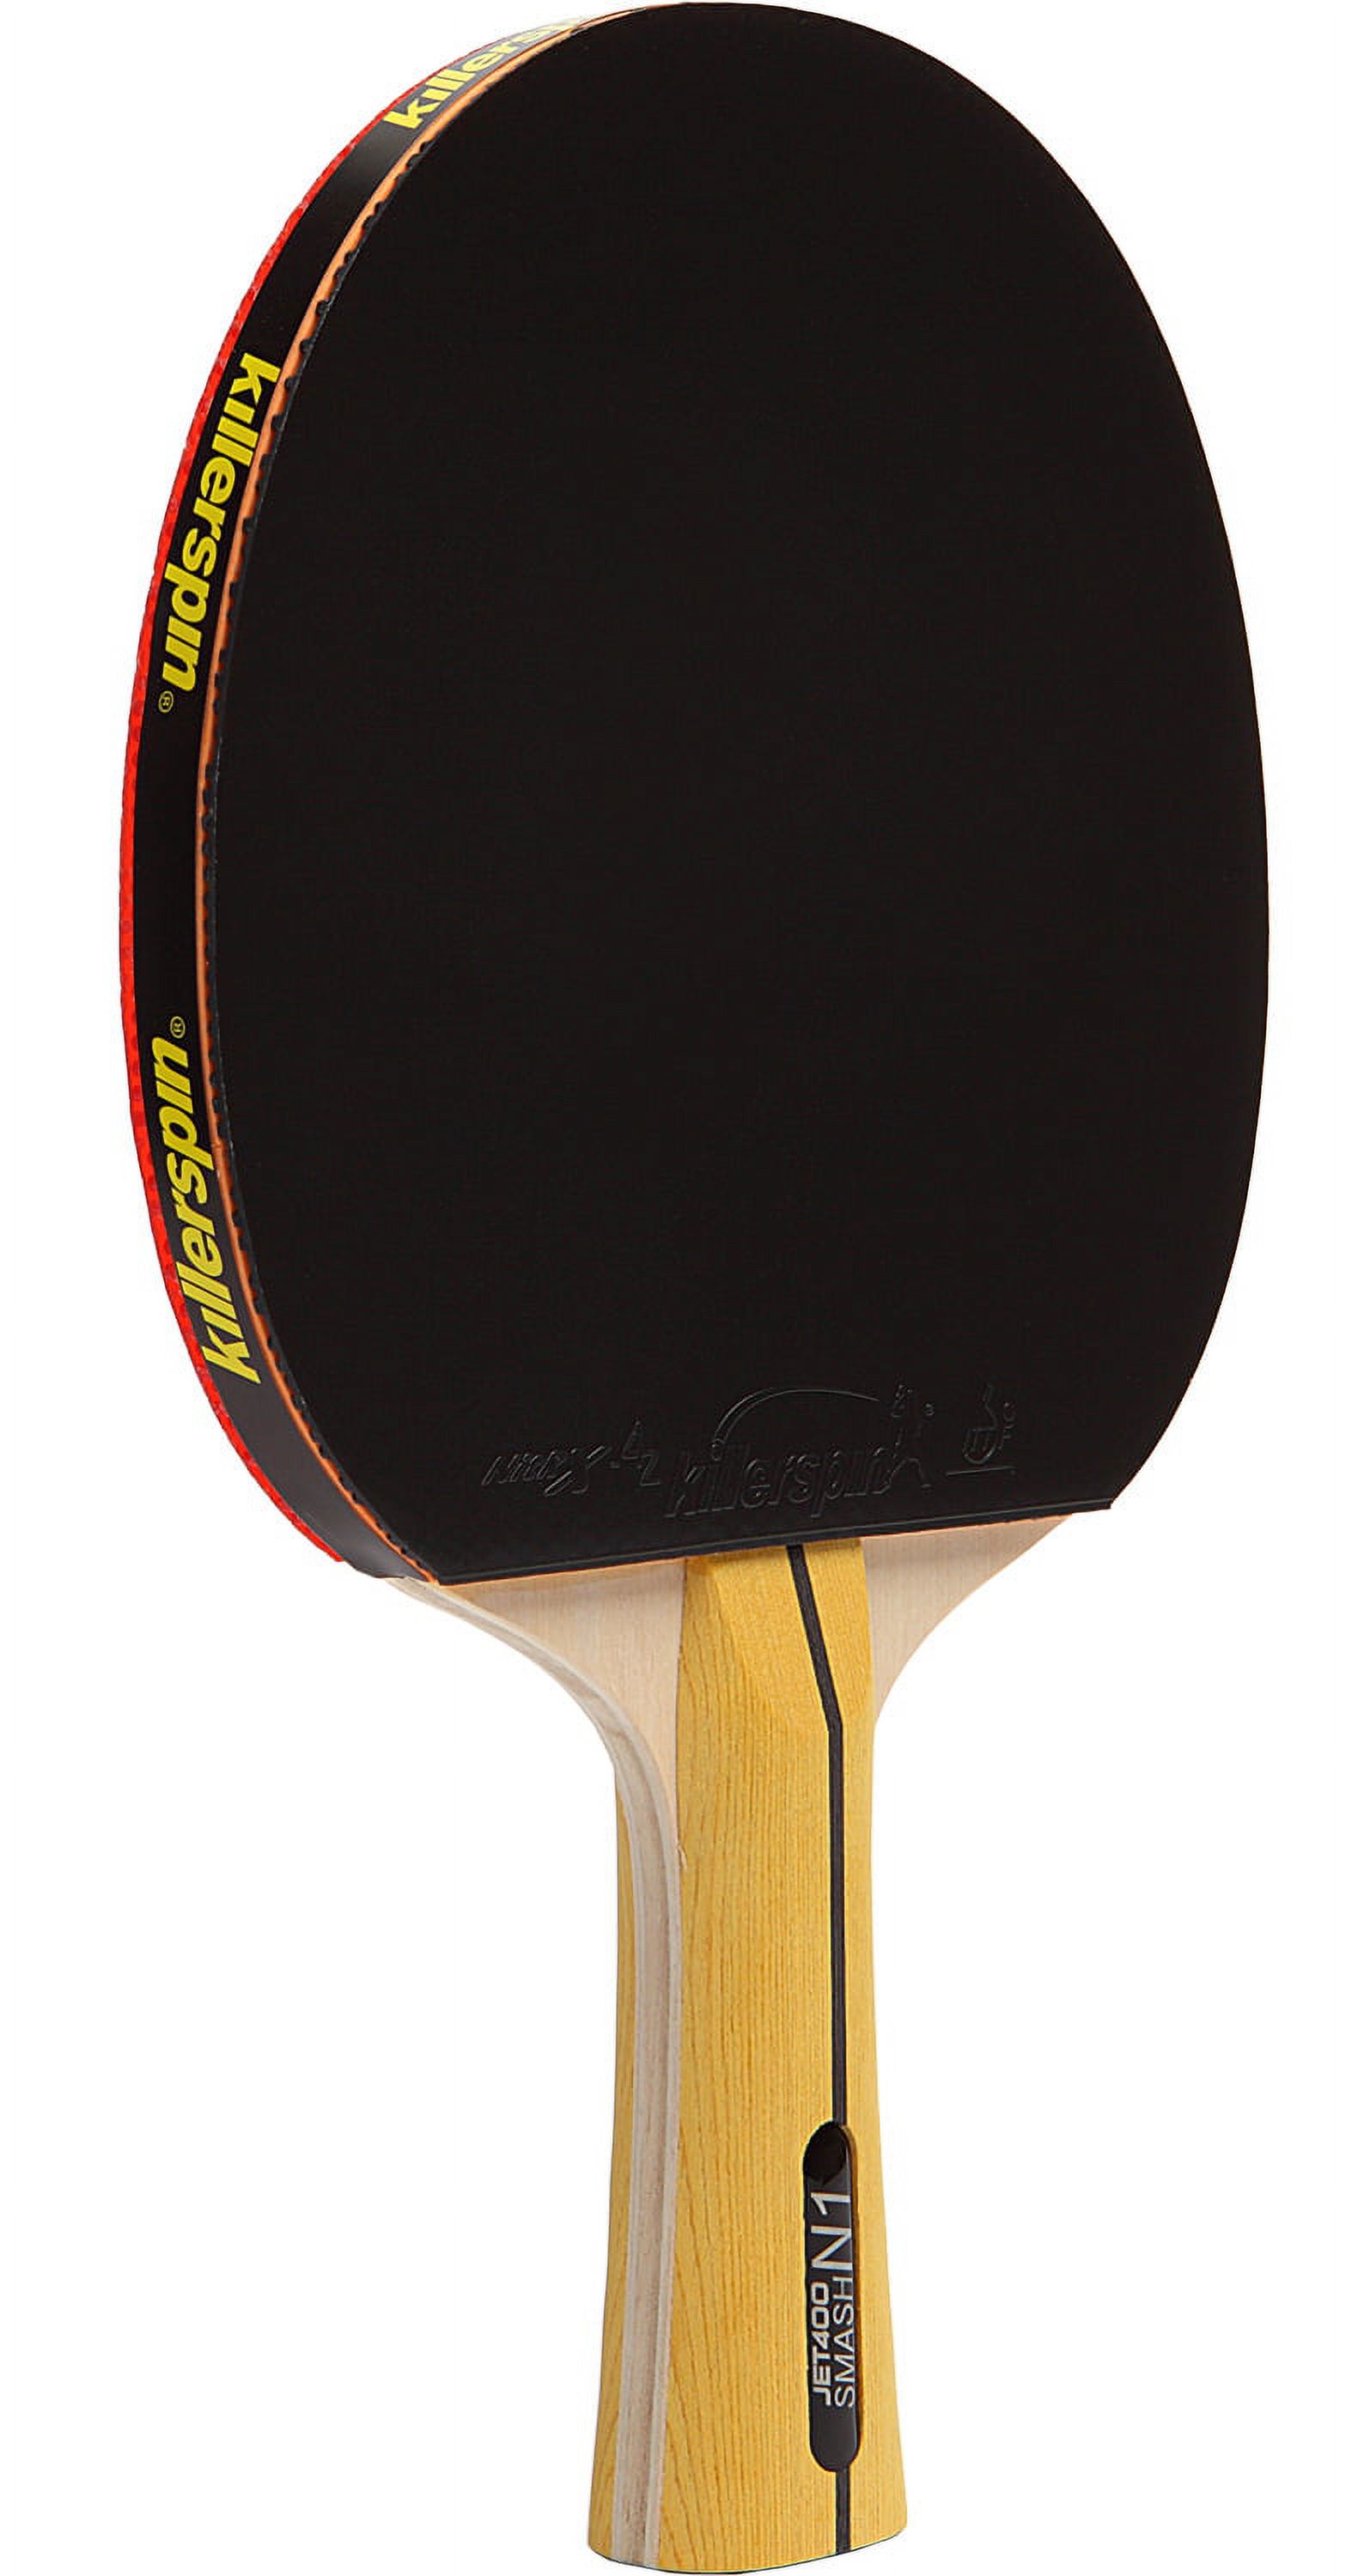 Killerspin JET400 Table Tennis Paddle, Ping Pong Racket - image 3 of 8